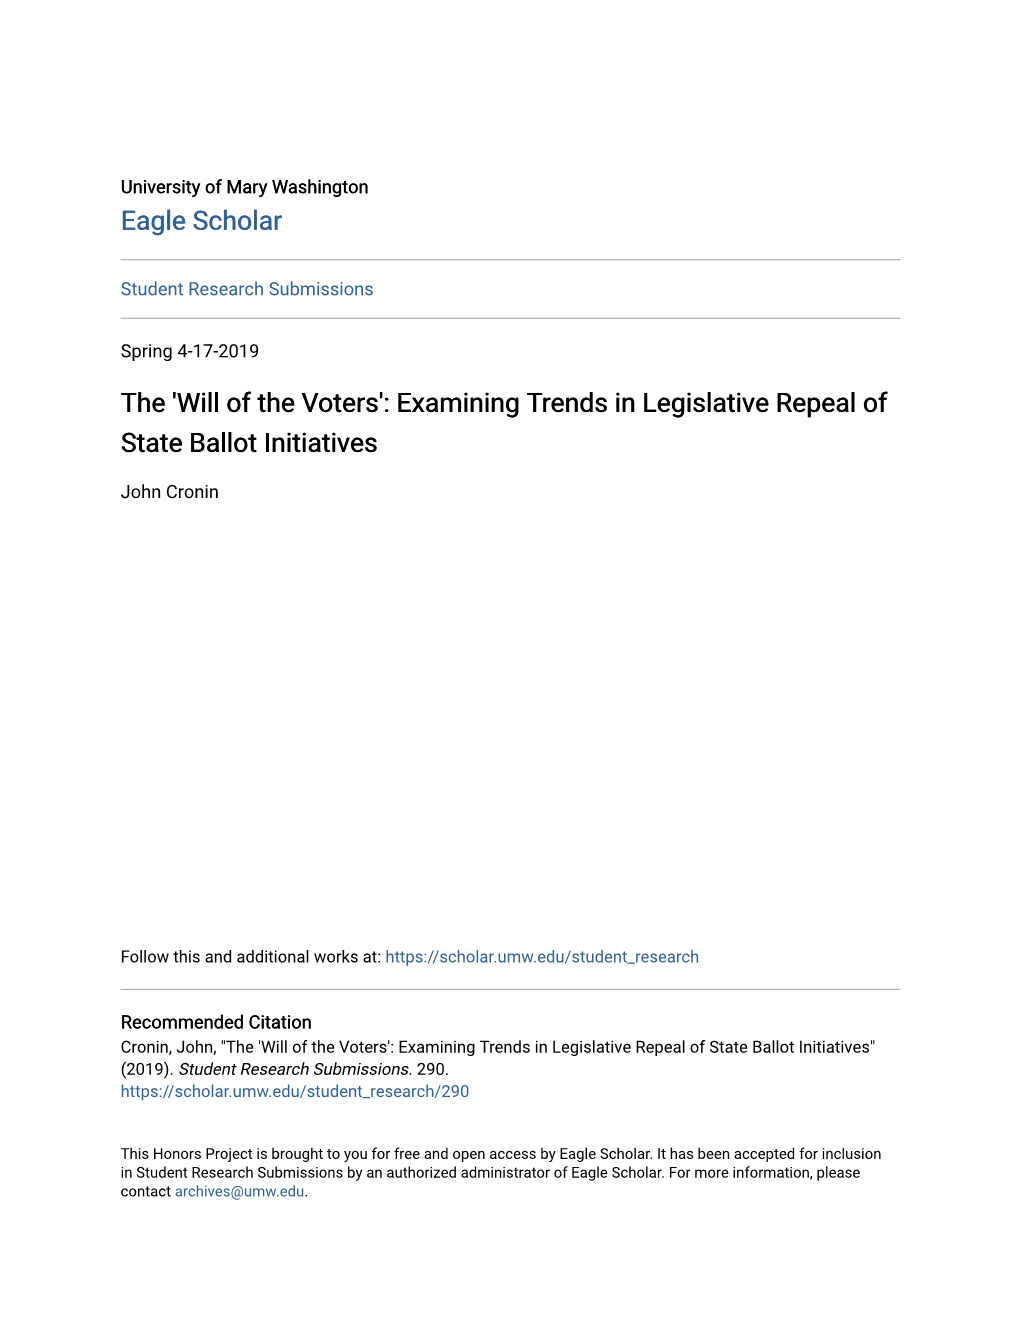 Examining Trends in Legislative Repeal of State Ballot Initiatives